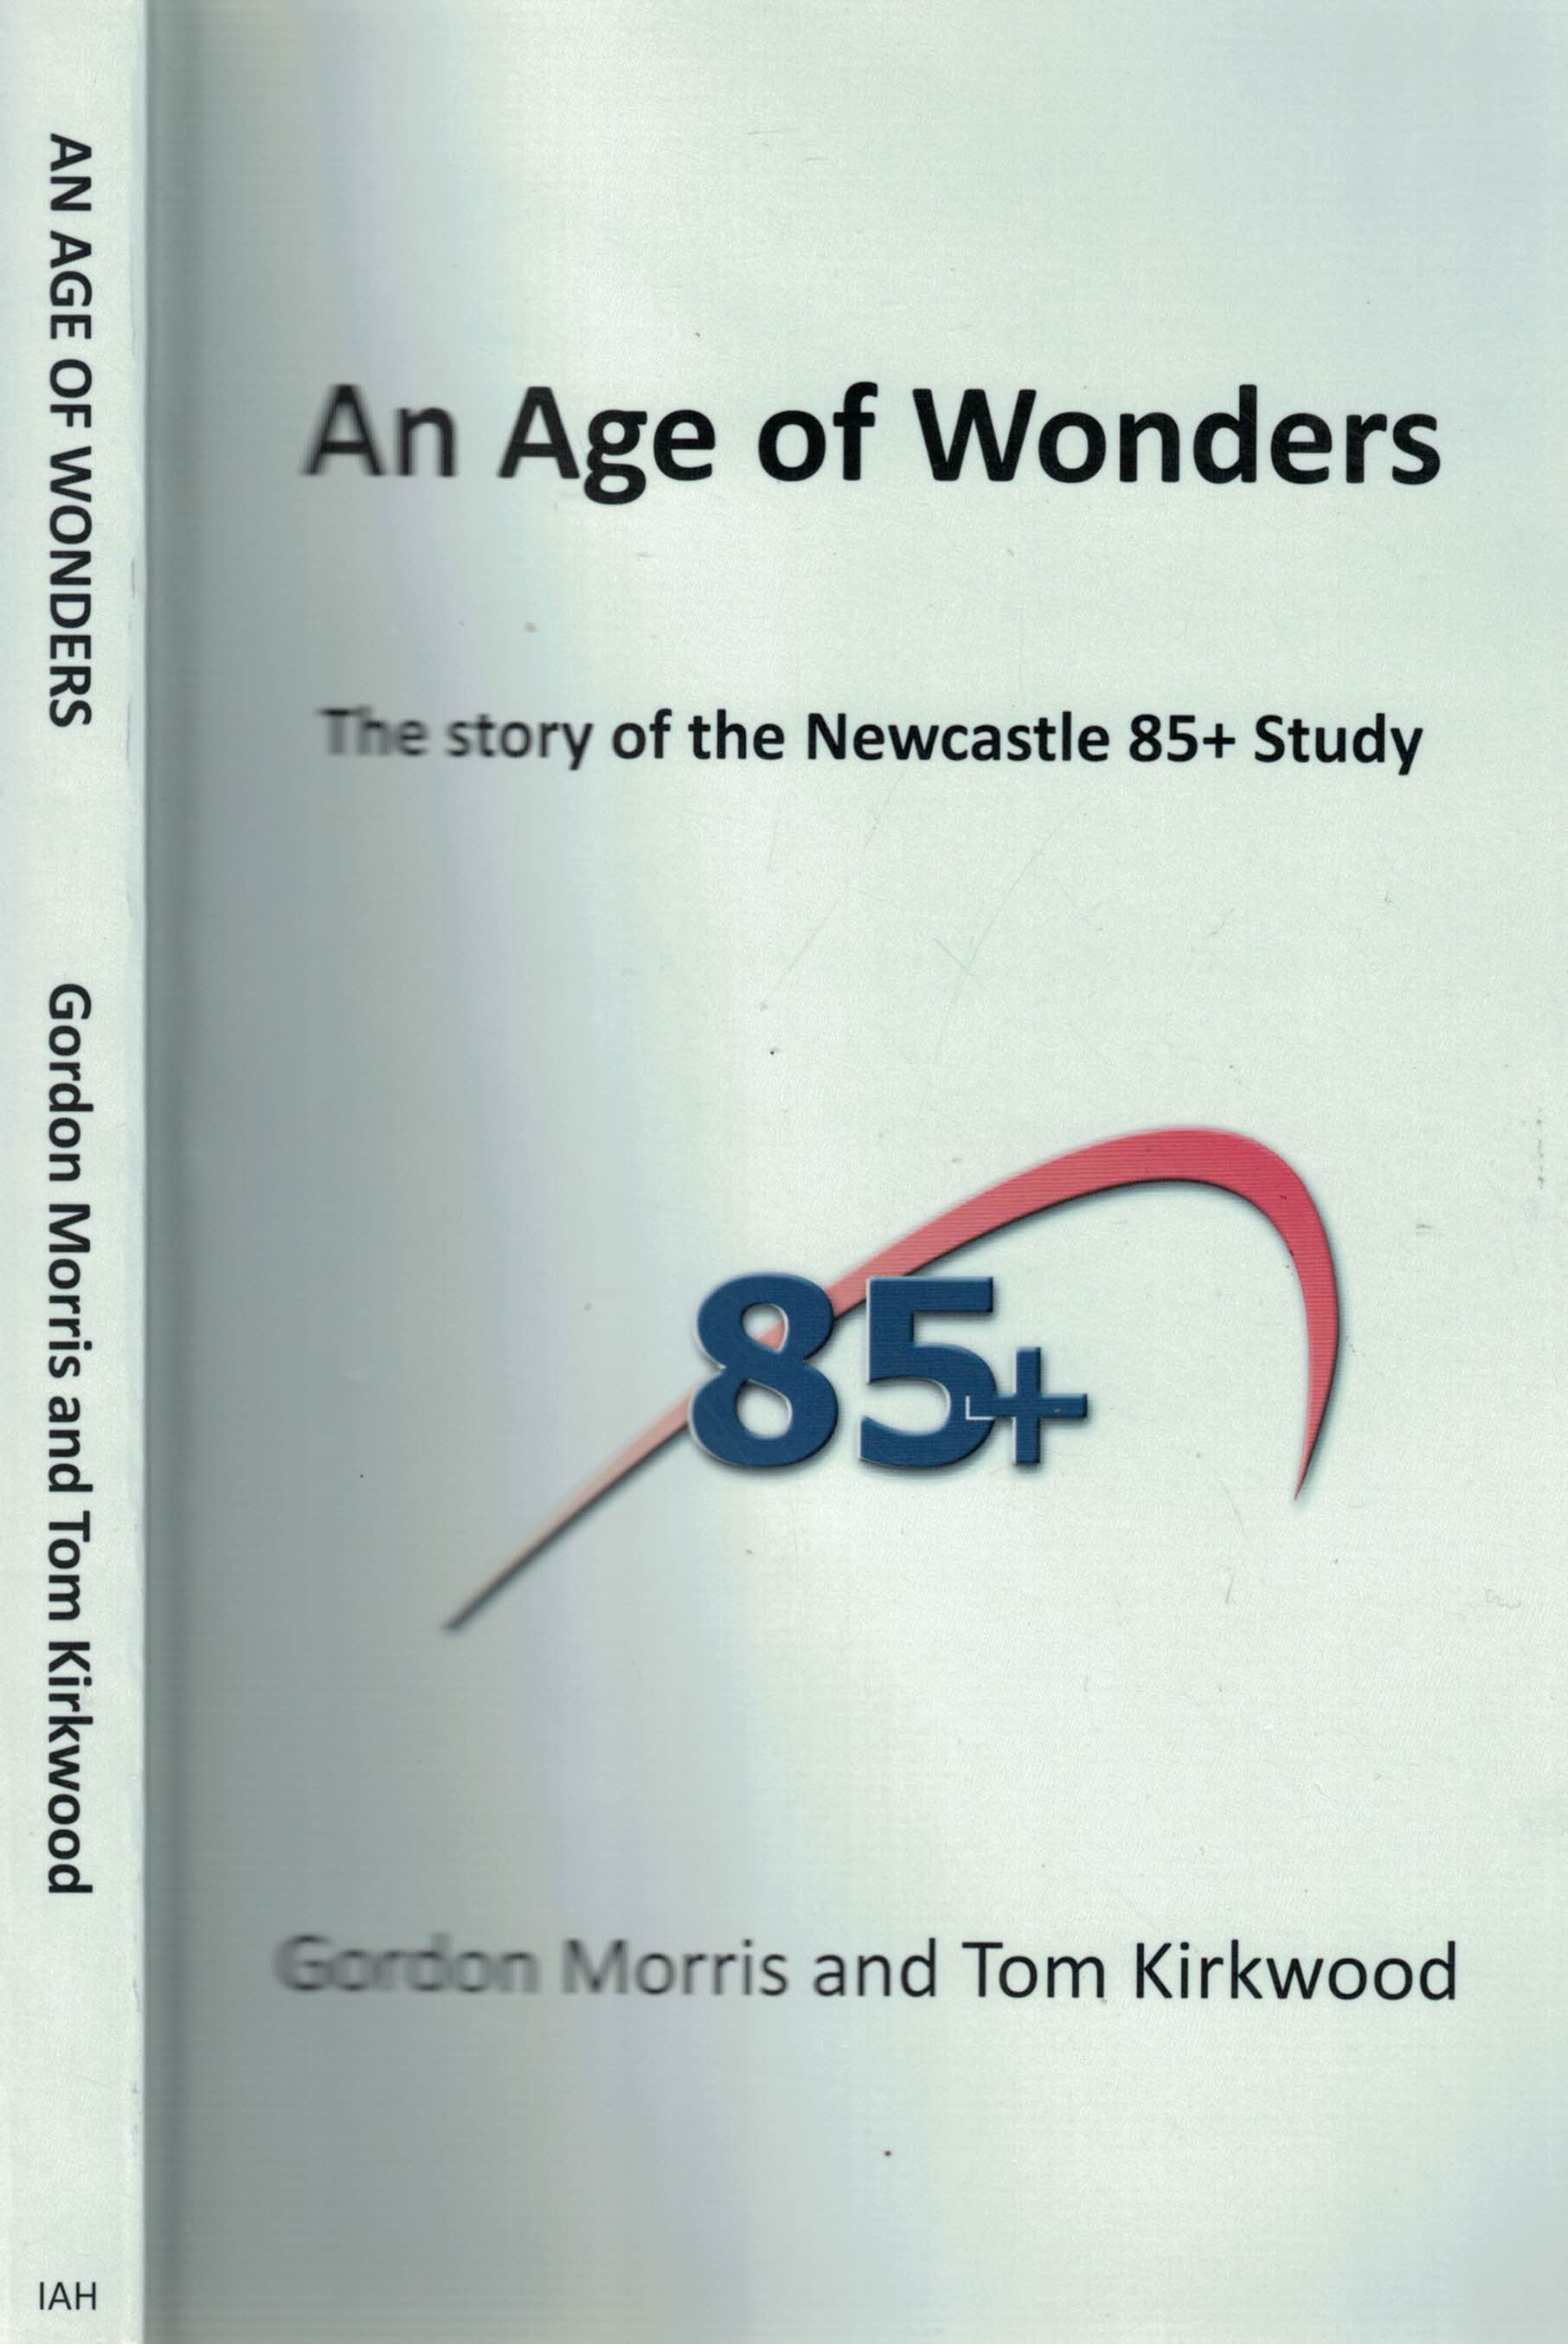 MORRIS, GORDON; KIRKWOOD, TOM - An Age of Wonders. The Story of the Newcastle 85+ Study